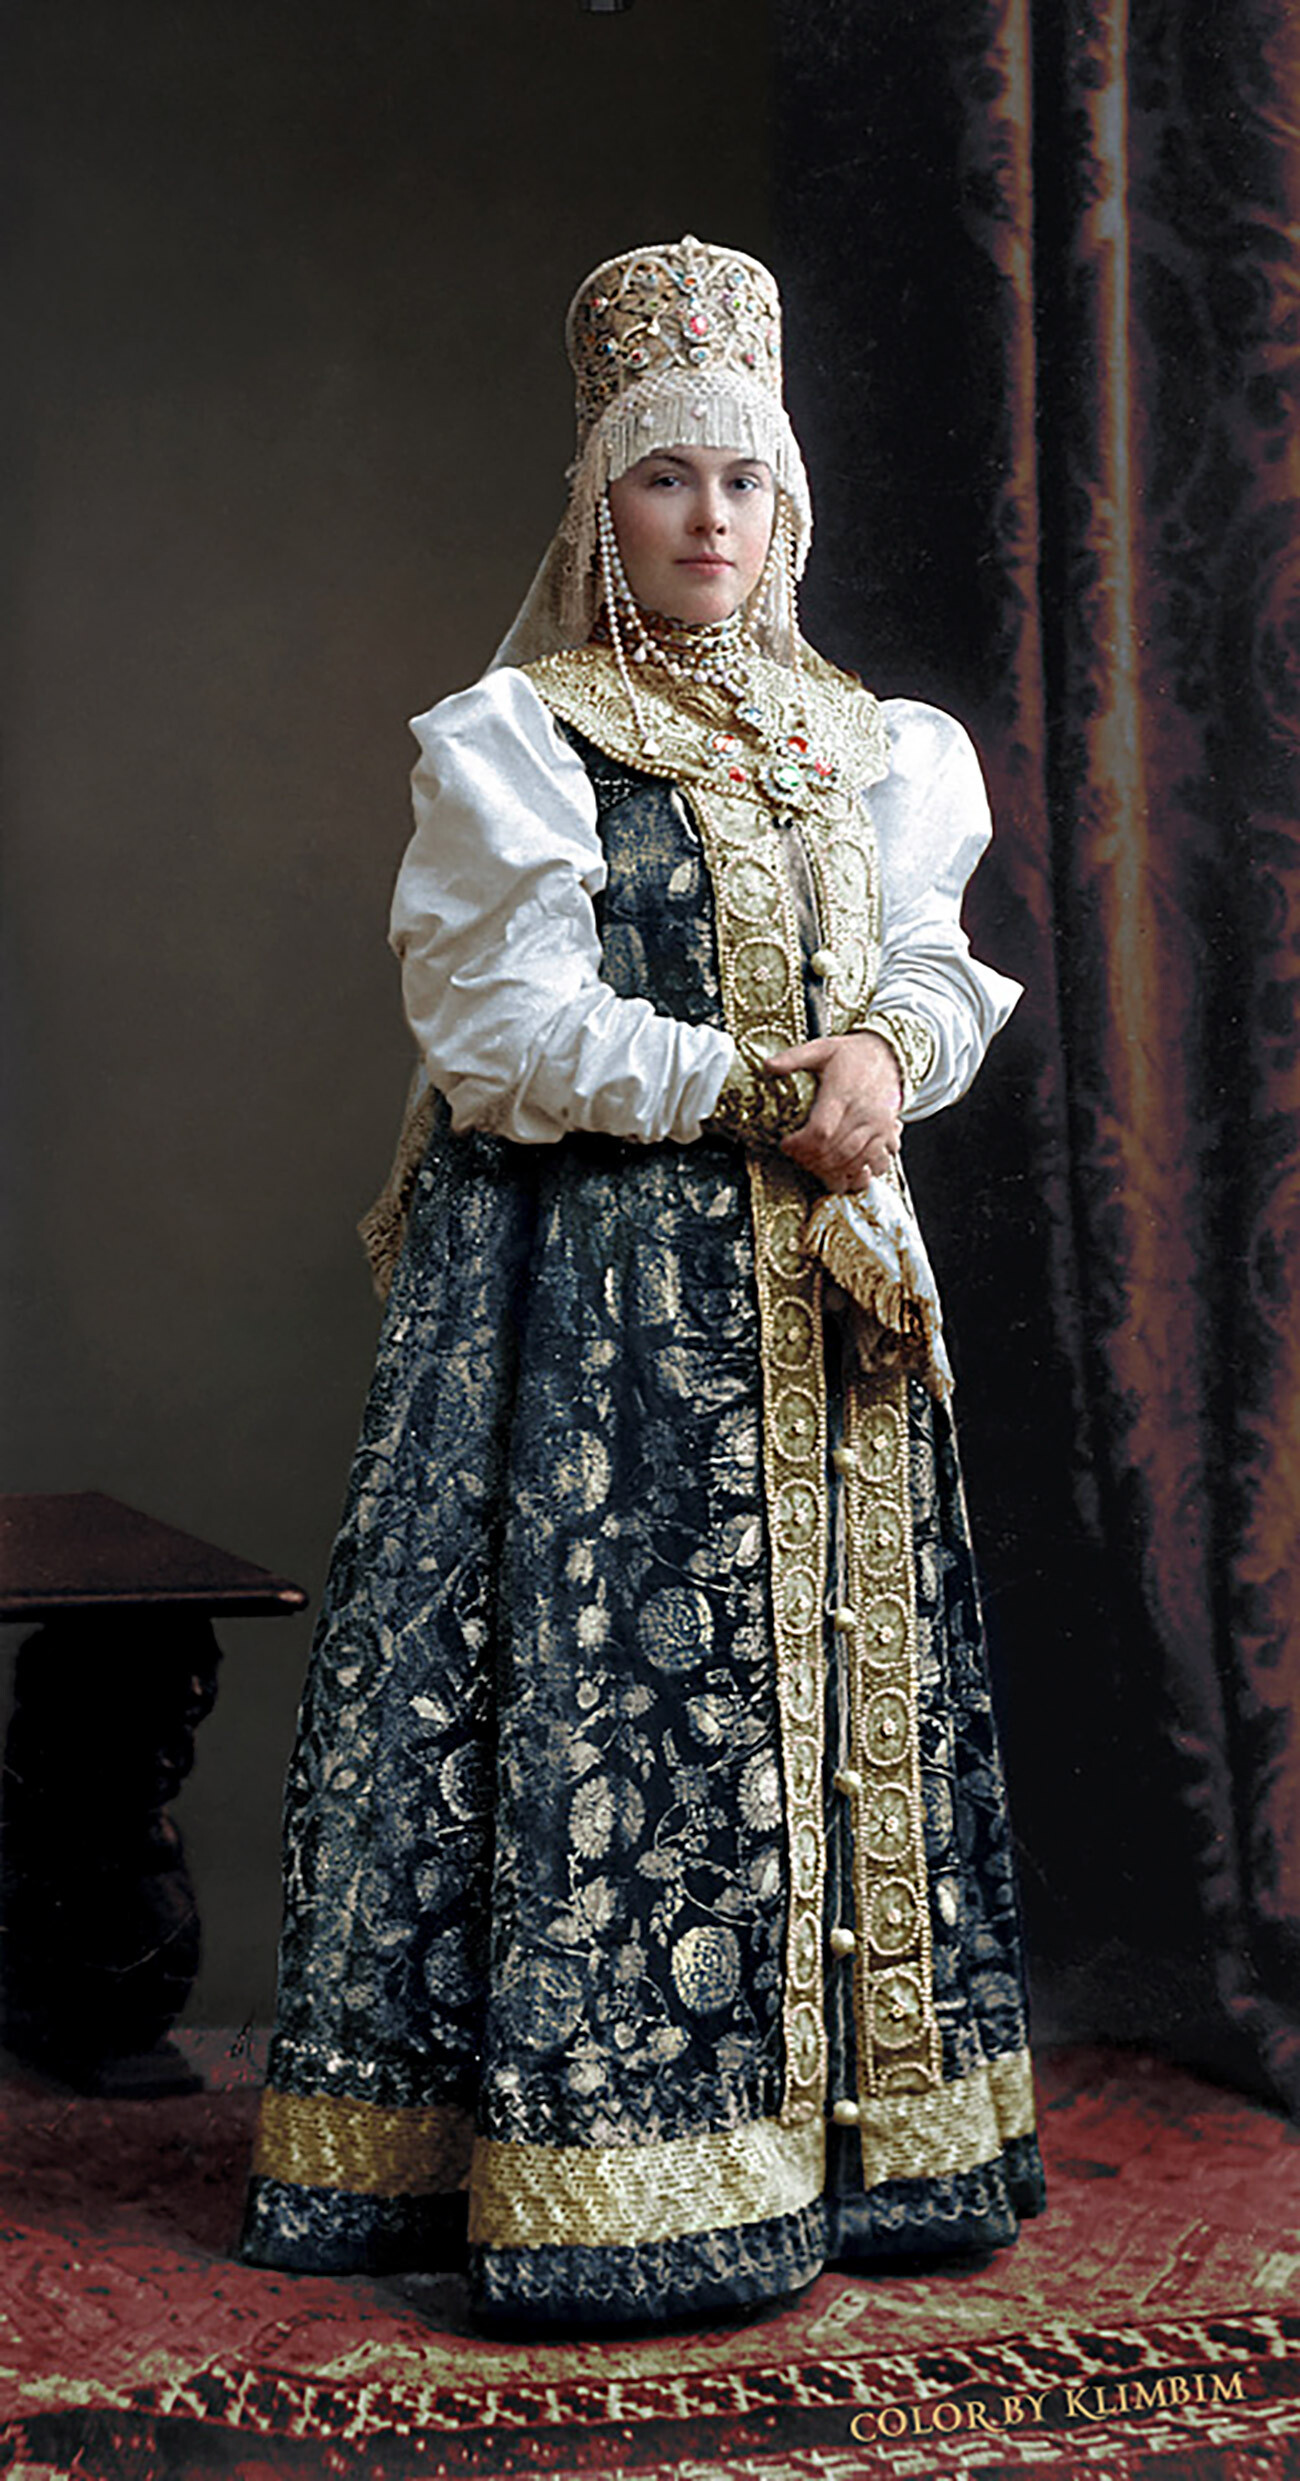 Countess Natalya Karlova

